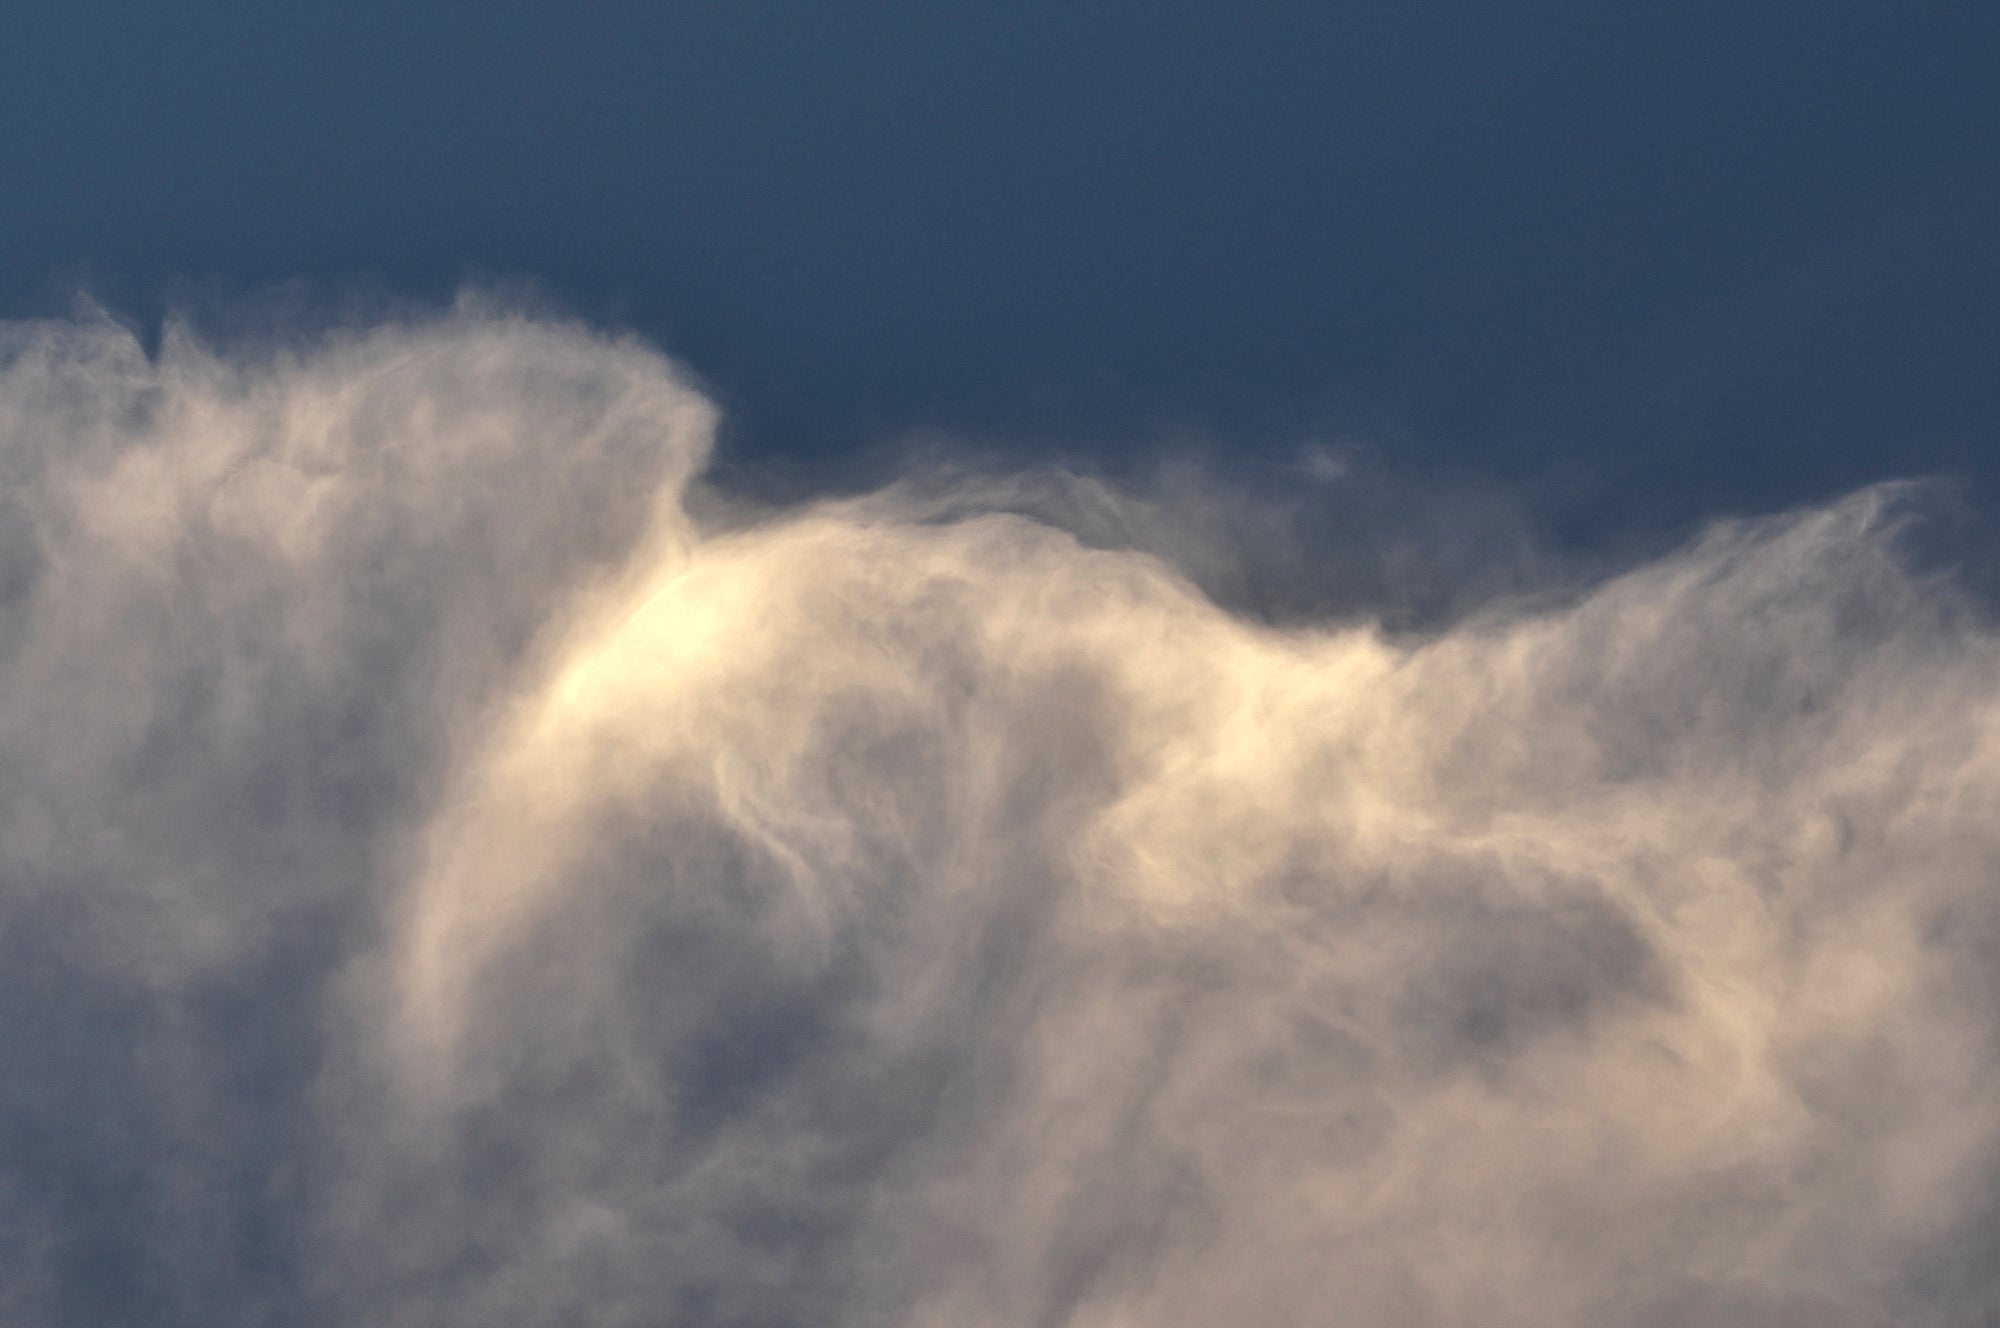 <I>Equivalent (Cloud - Homage to A. Stieglitz)</I><br>Mendocino, California, 2015<br><br>GC0396